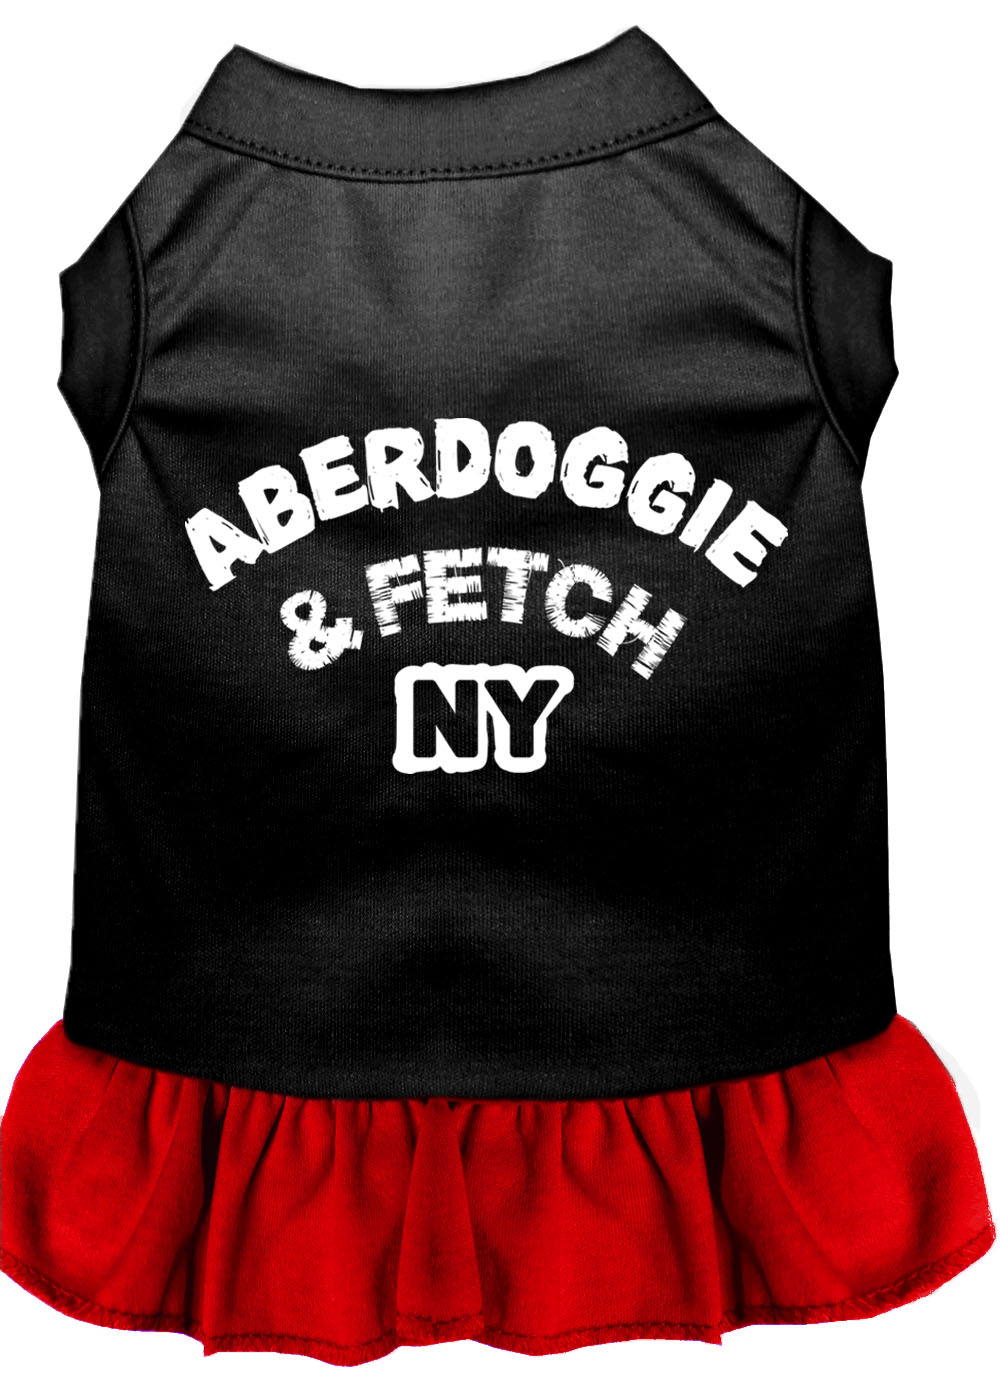 Aberdoggie NY Screen Print Dog Dress Black with Red Lg